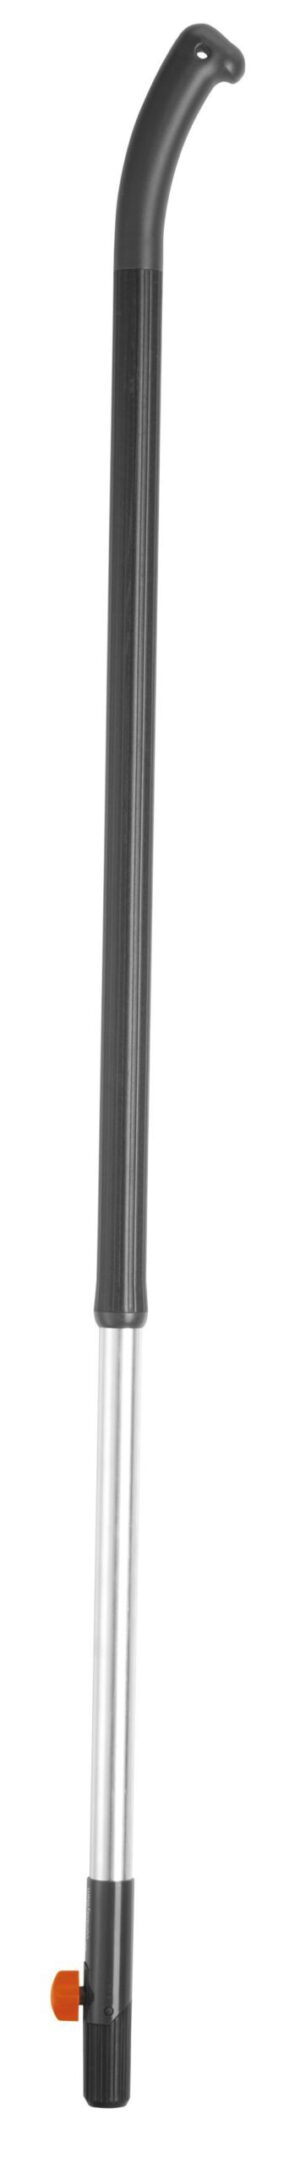 Gardena Combi System Ergoline steel 130 cm